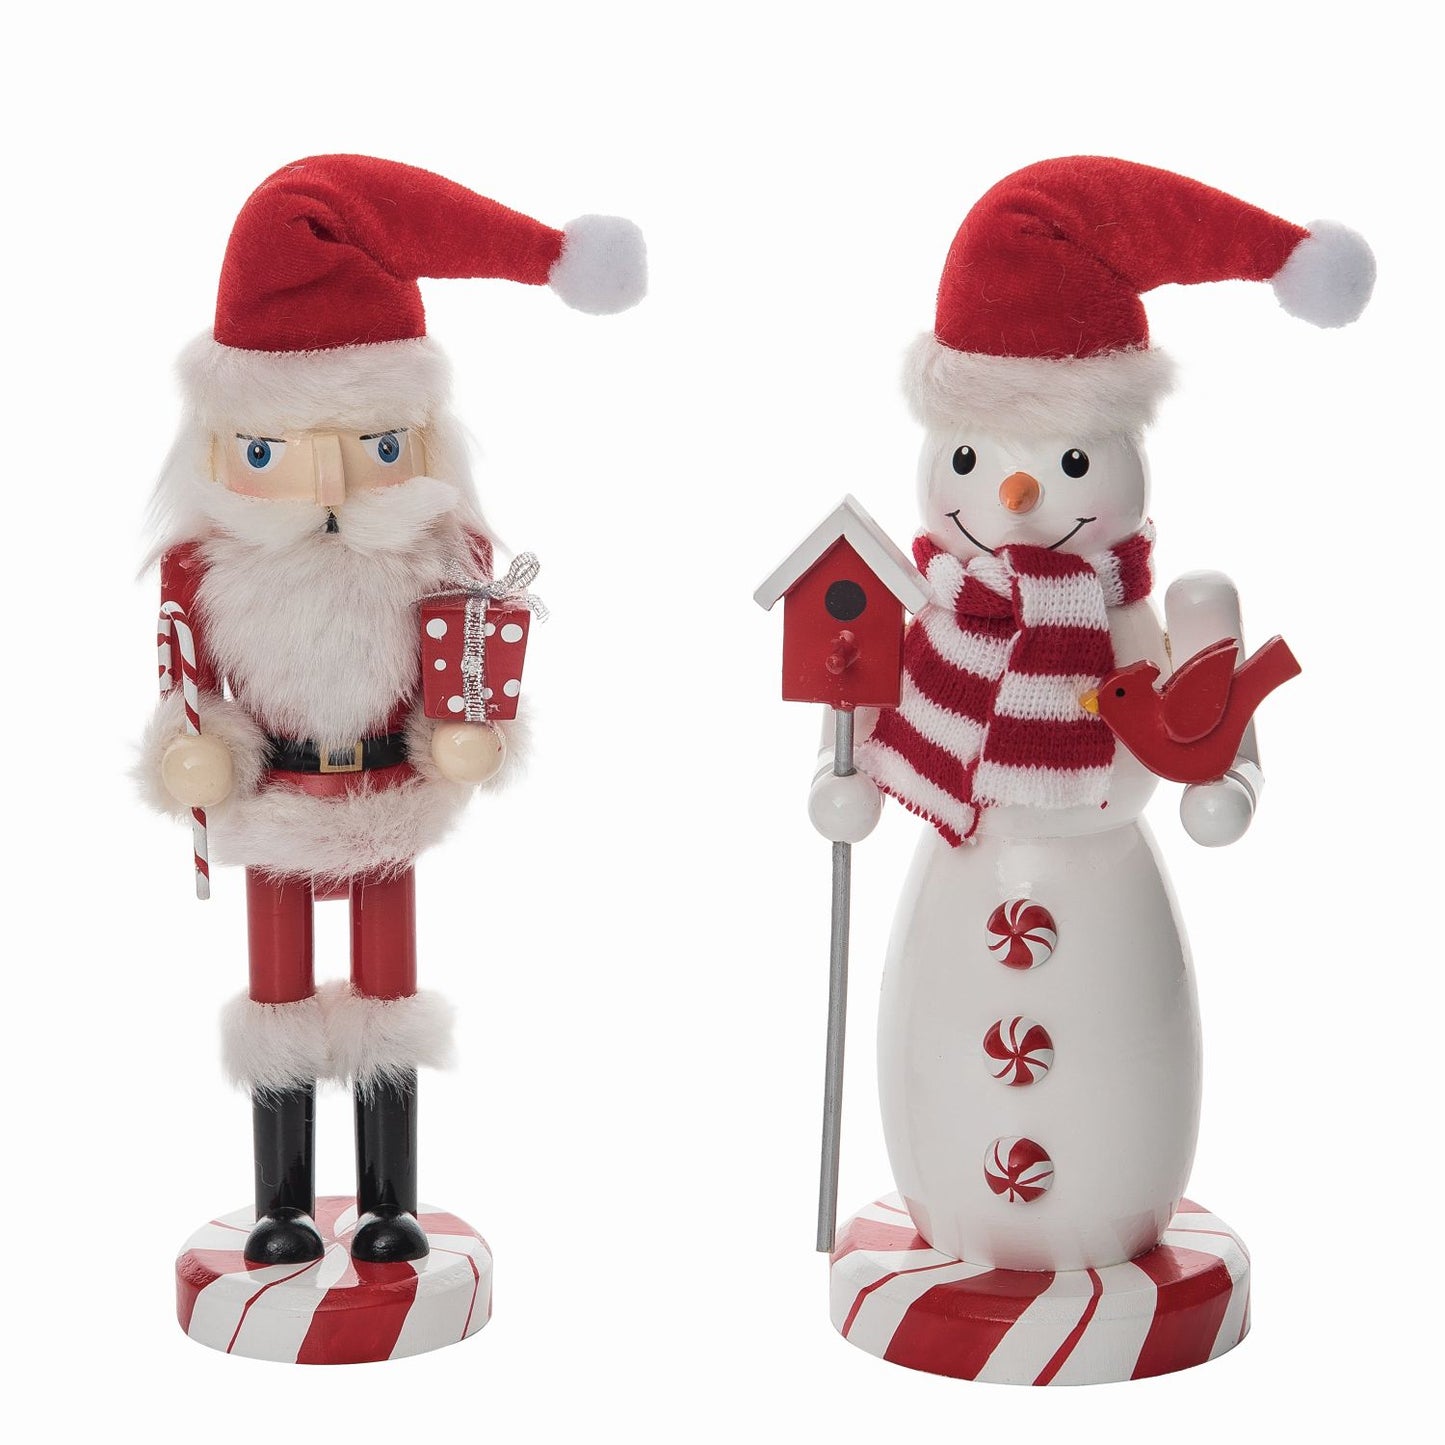 Transpac Wooden 10” Snowman/Santa Nutcracker, Set Of 2, Assortment